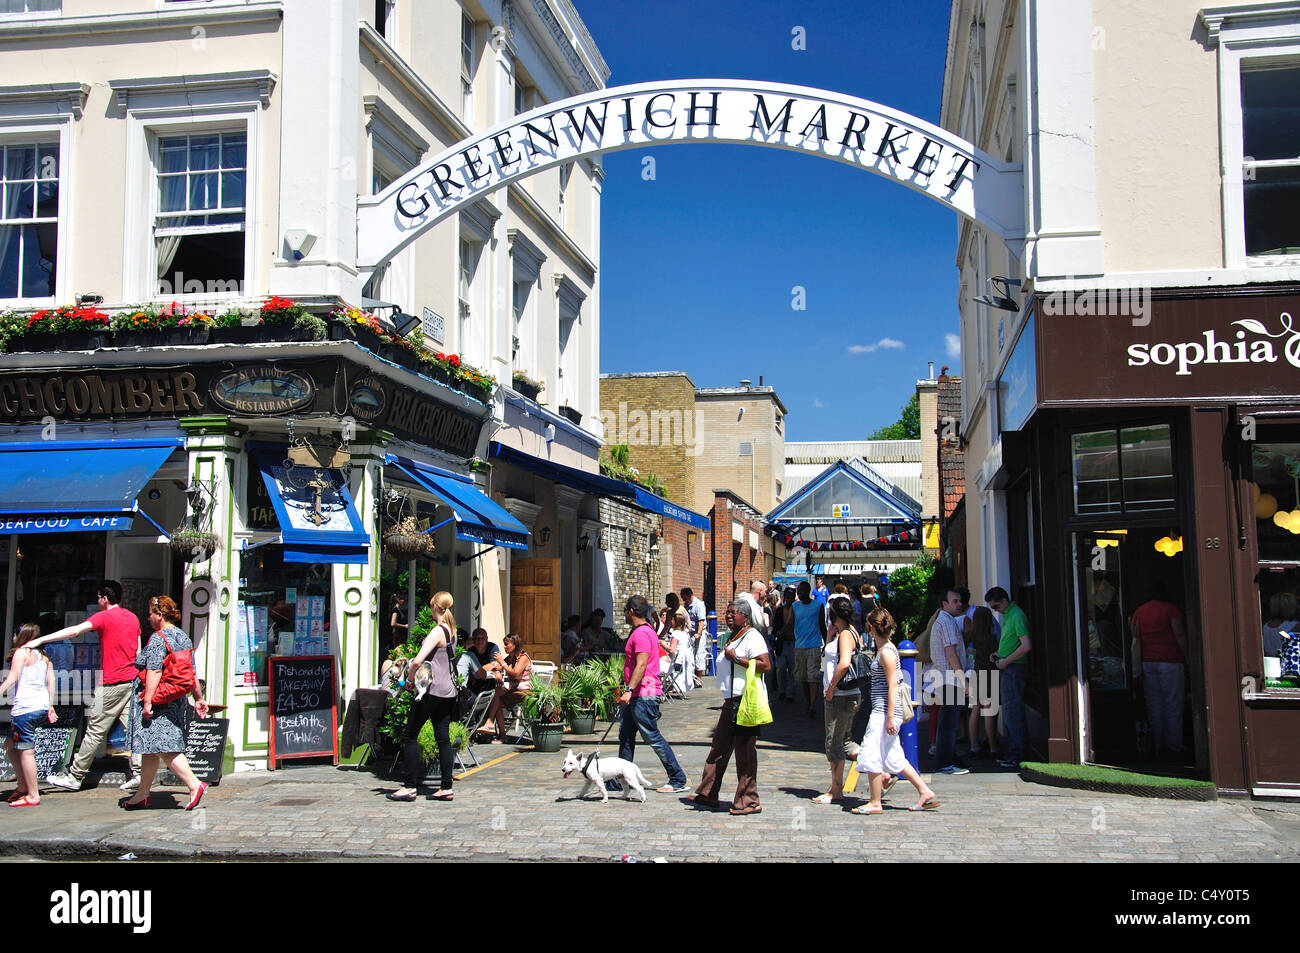 Entrance sign, Greenwich Market, Durnford St, Greenwich, London Borough of Greenwich, Greater London, England, United Kingdom Stock Photo